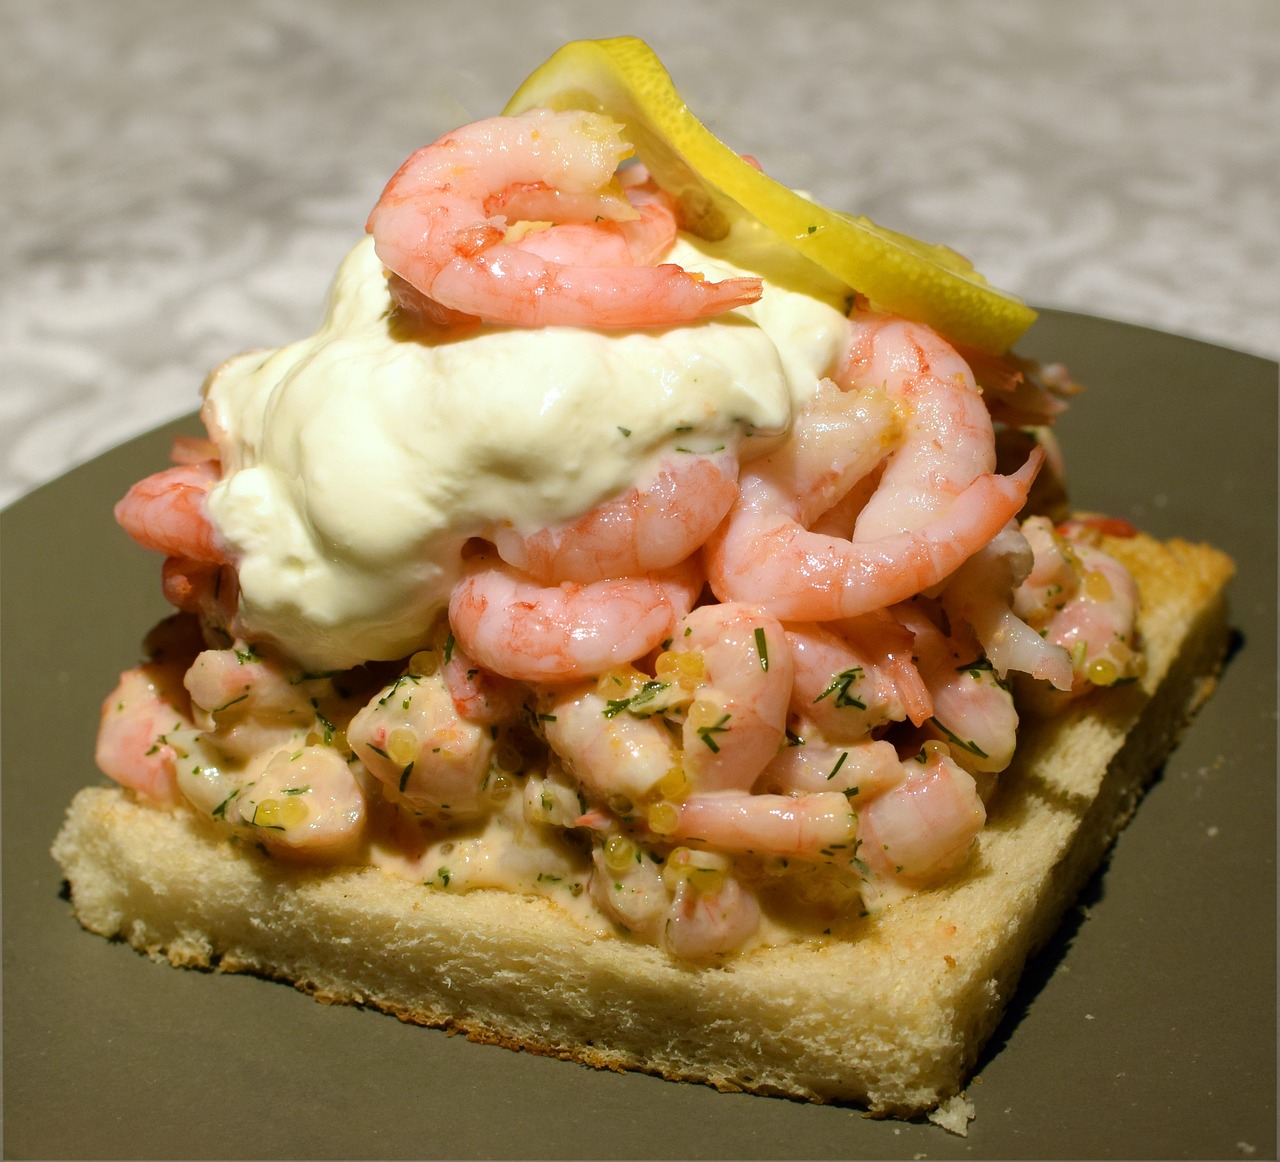 What do Swedes eat for dinner toast skagen shrimp mayonnaise, bread